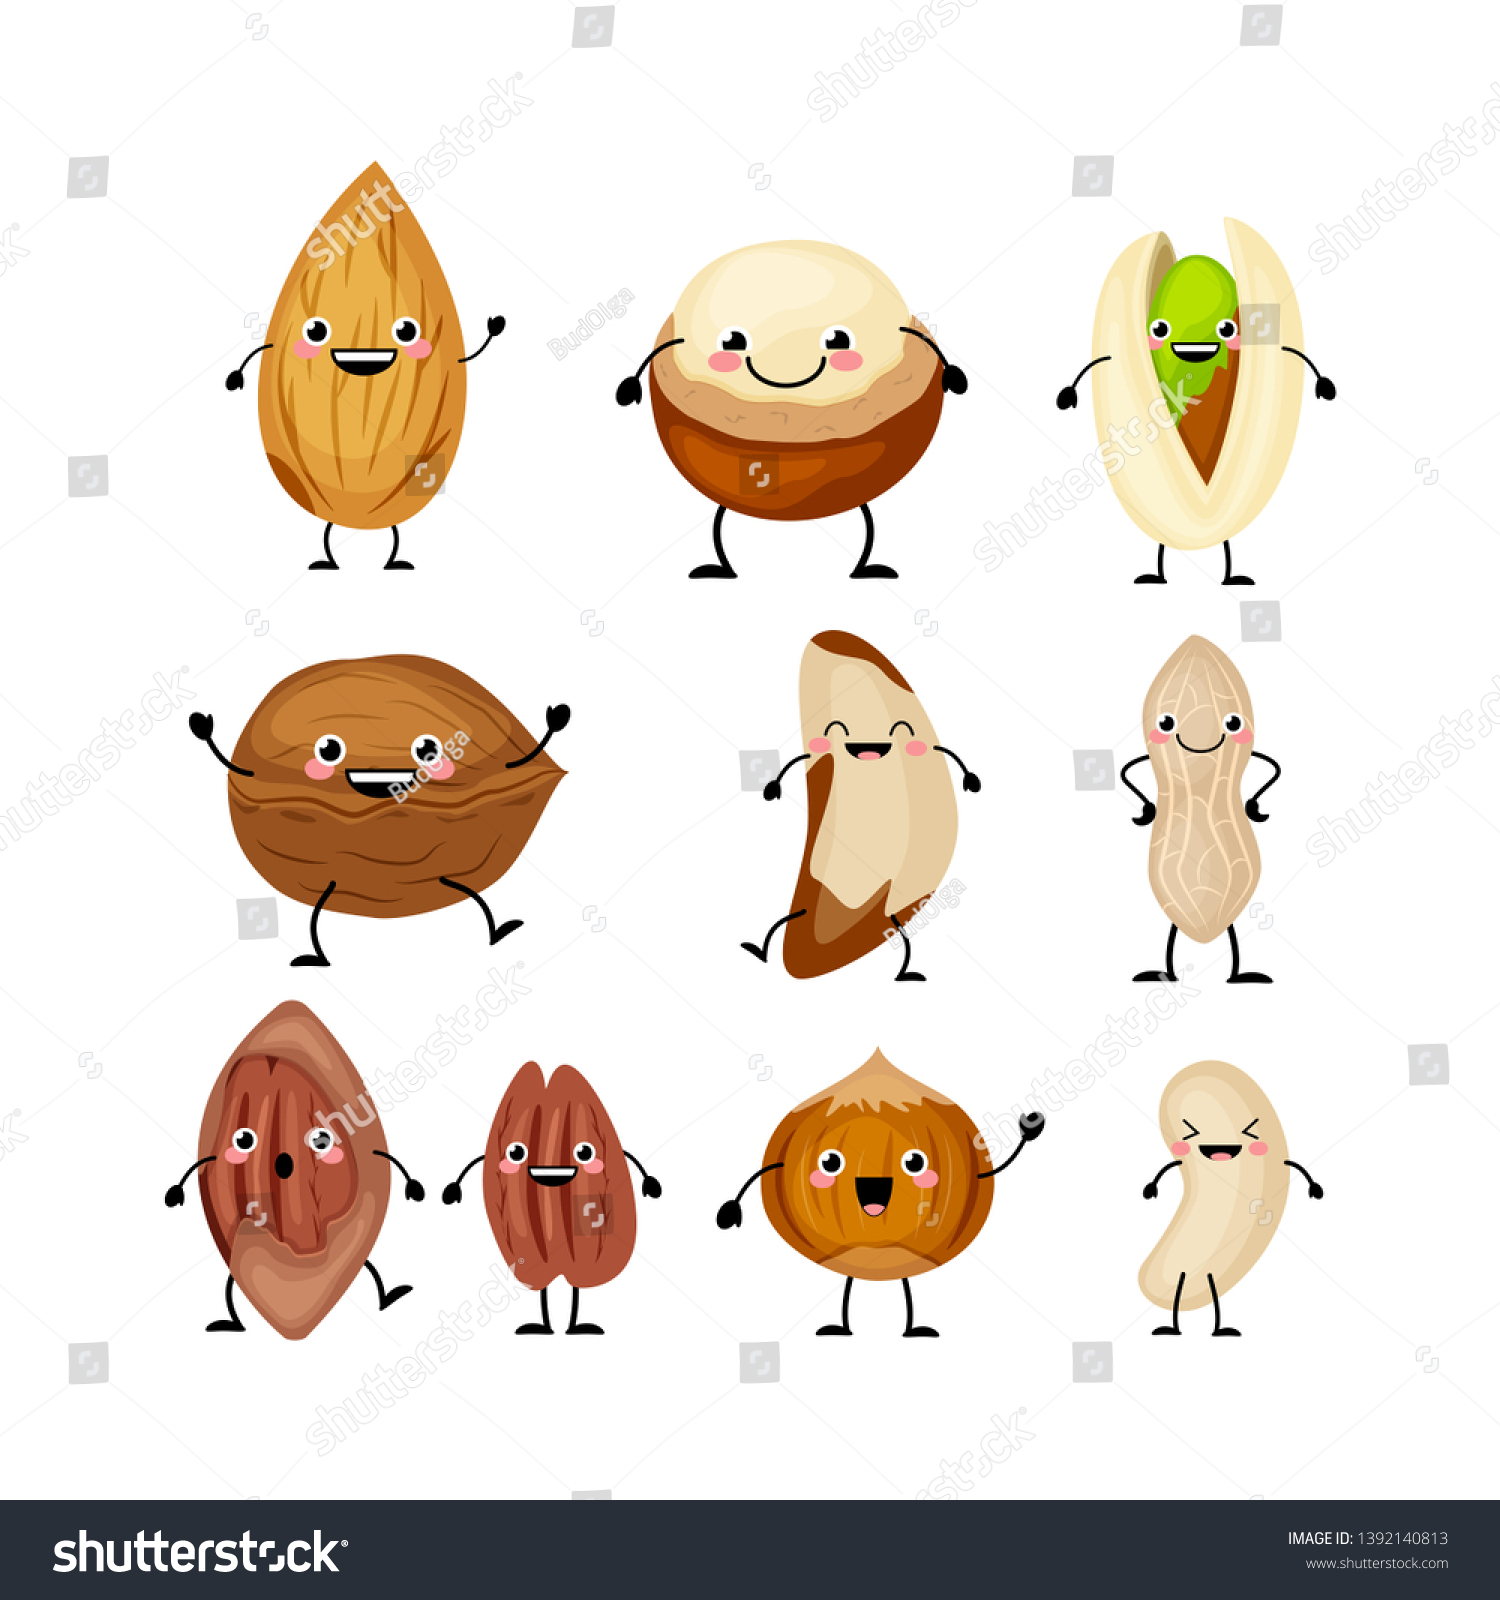 Set of different cartoon nuts vector illustration isolated on white background. Kawaii peanut, hazelnut, walnut, Brazil nut, pistachio, cashew, pecan, almond, macadamia. #1392140813